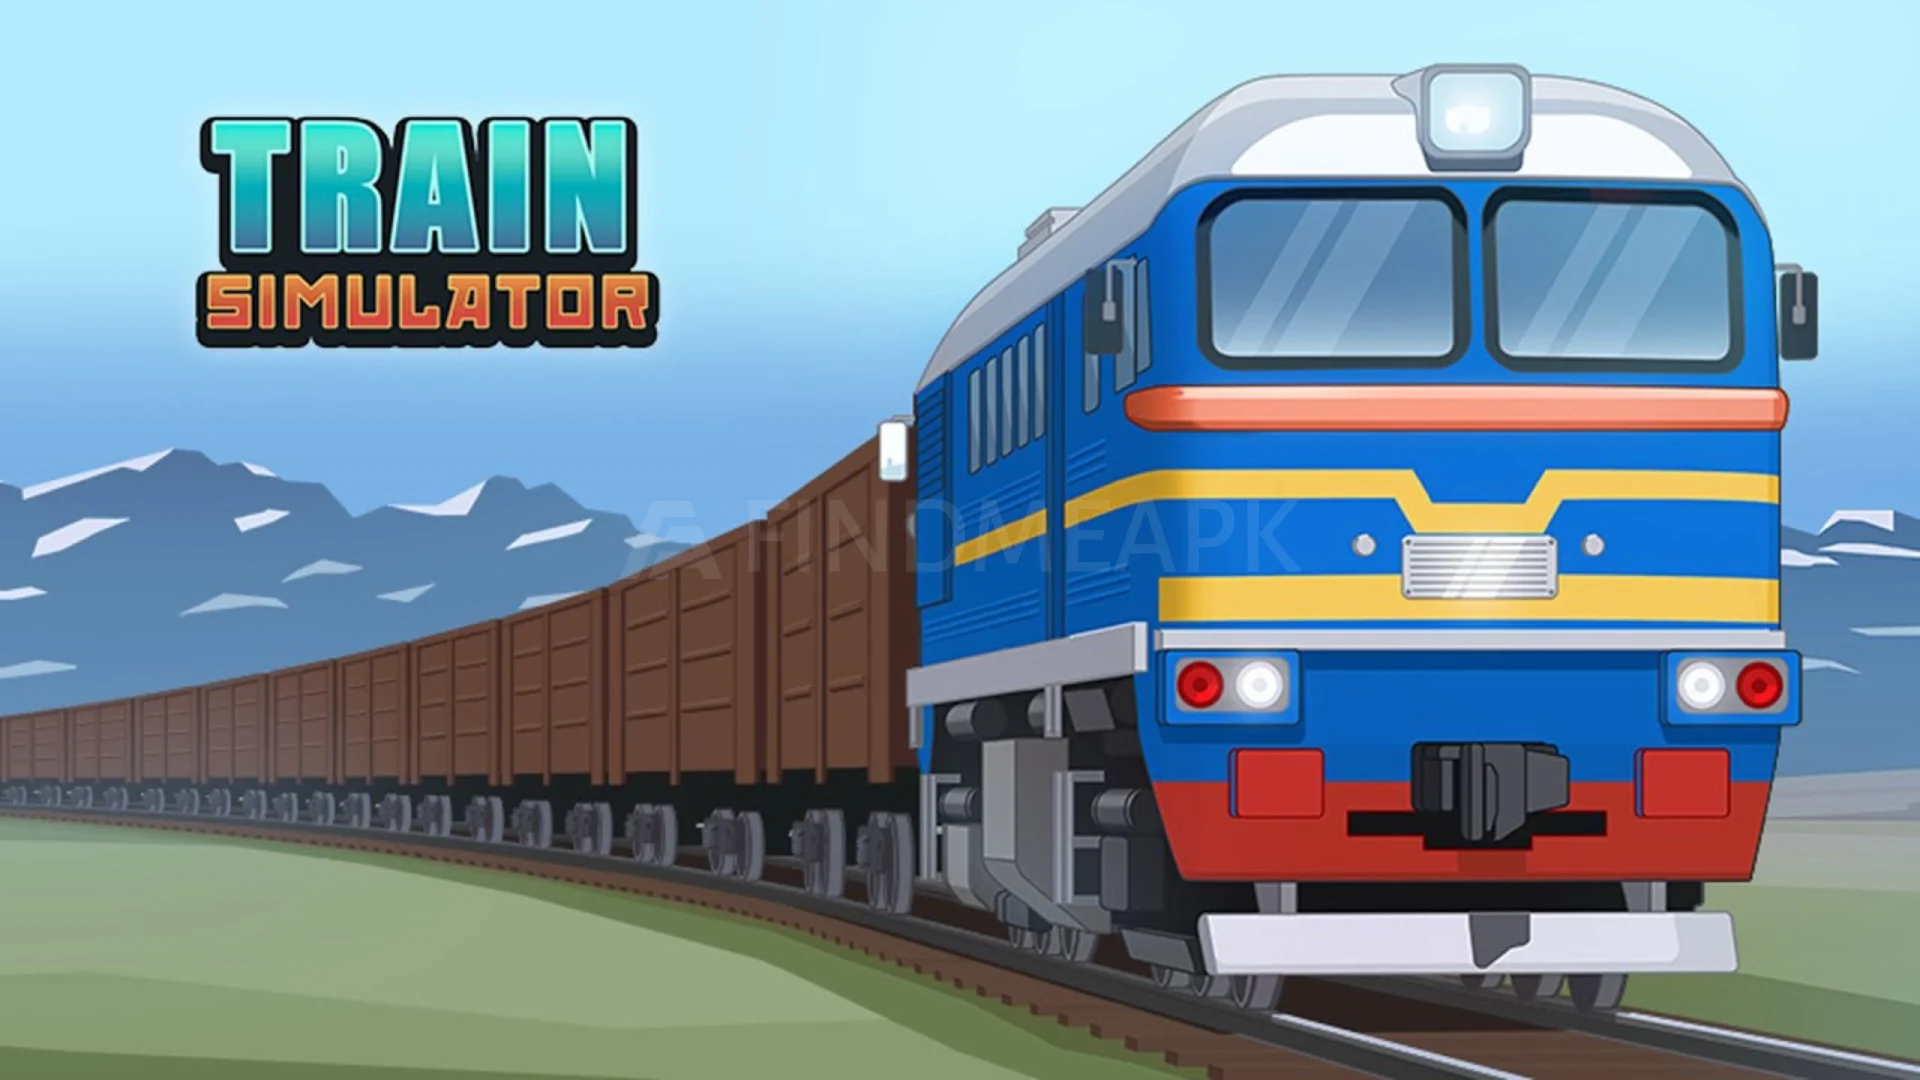 Train Simulator feature image